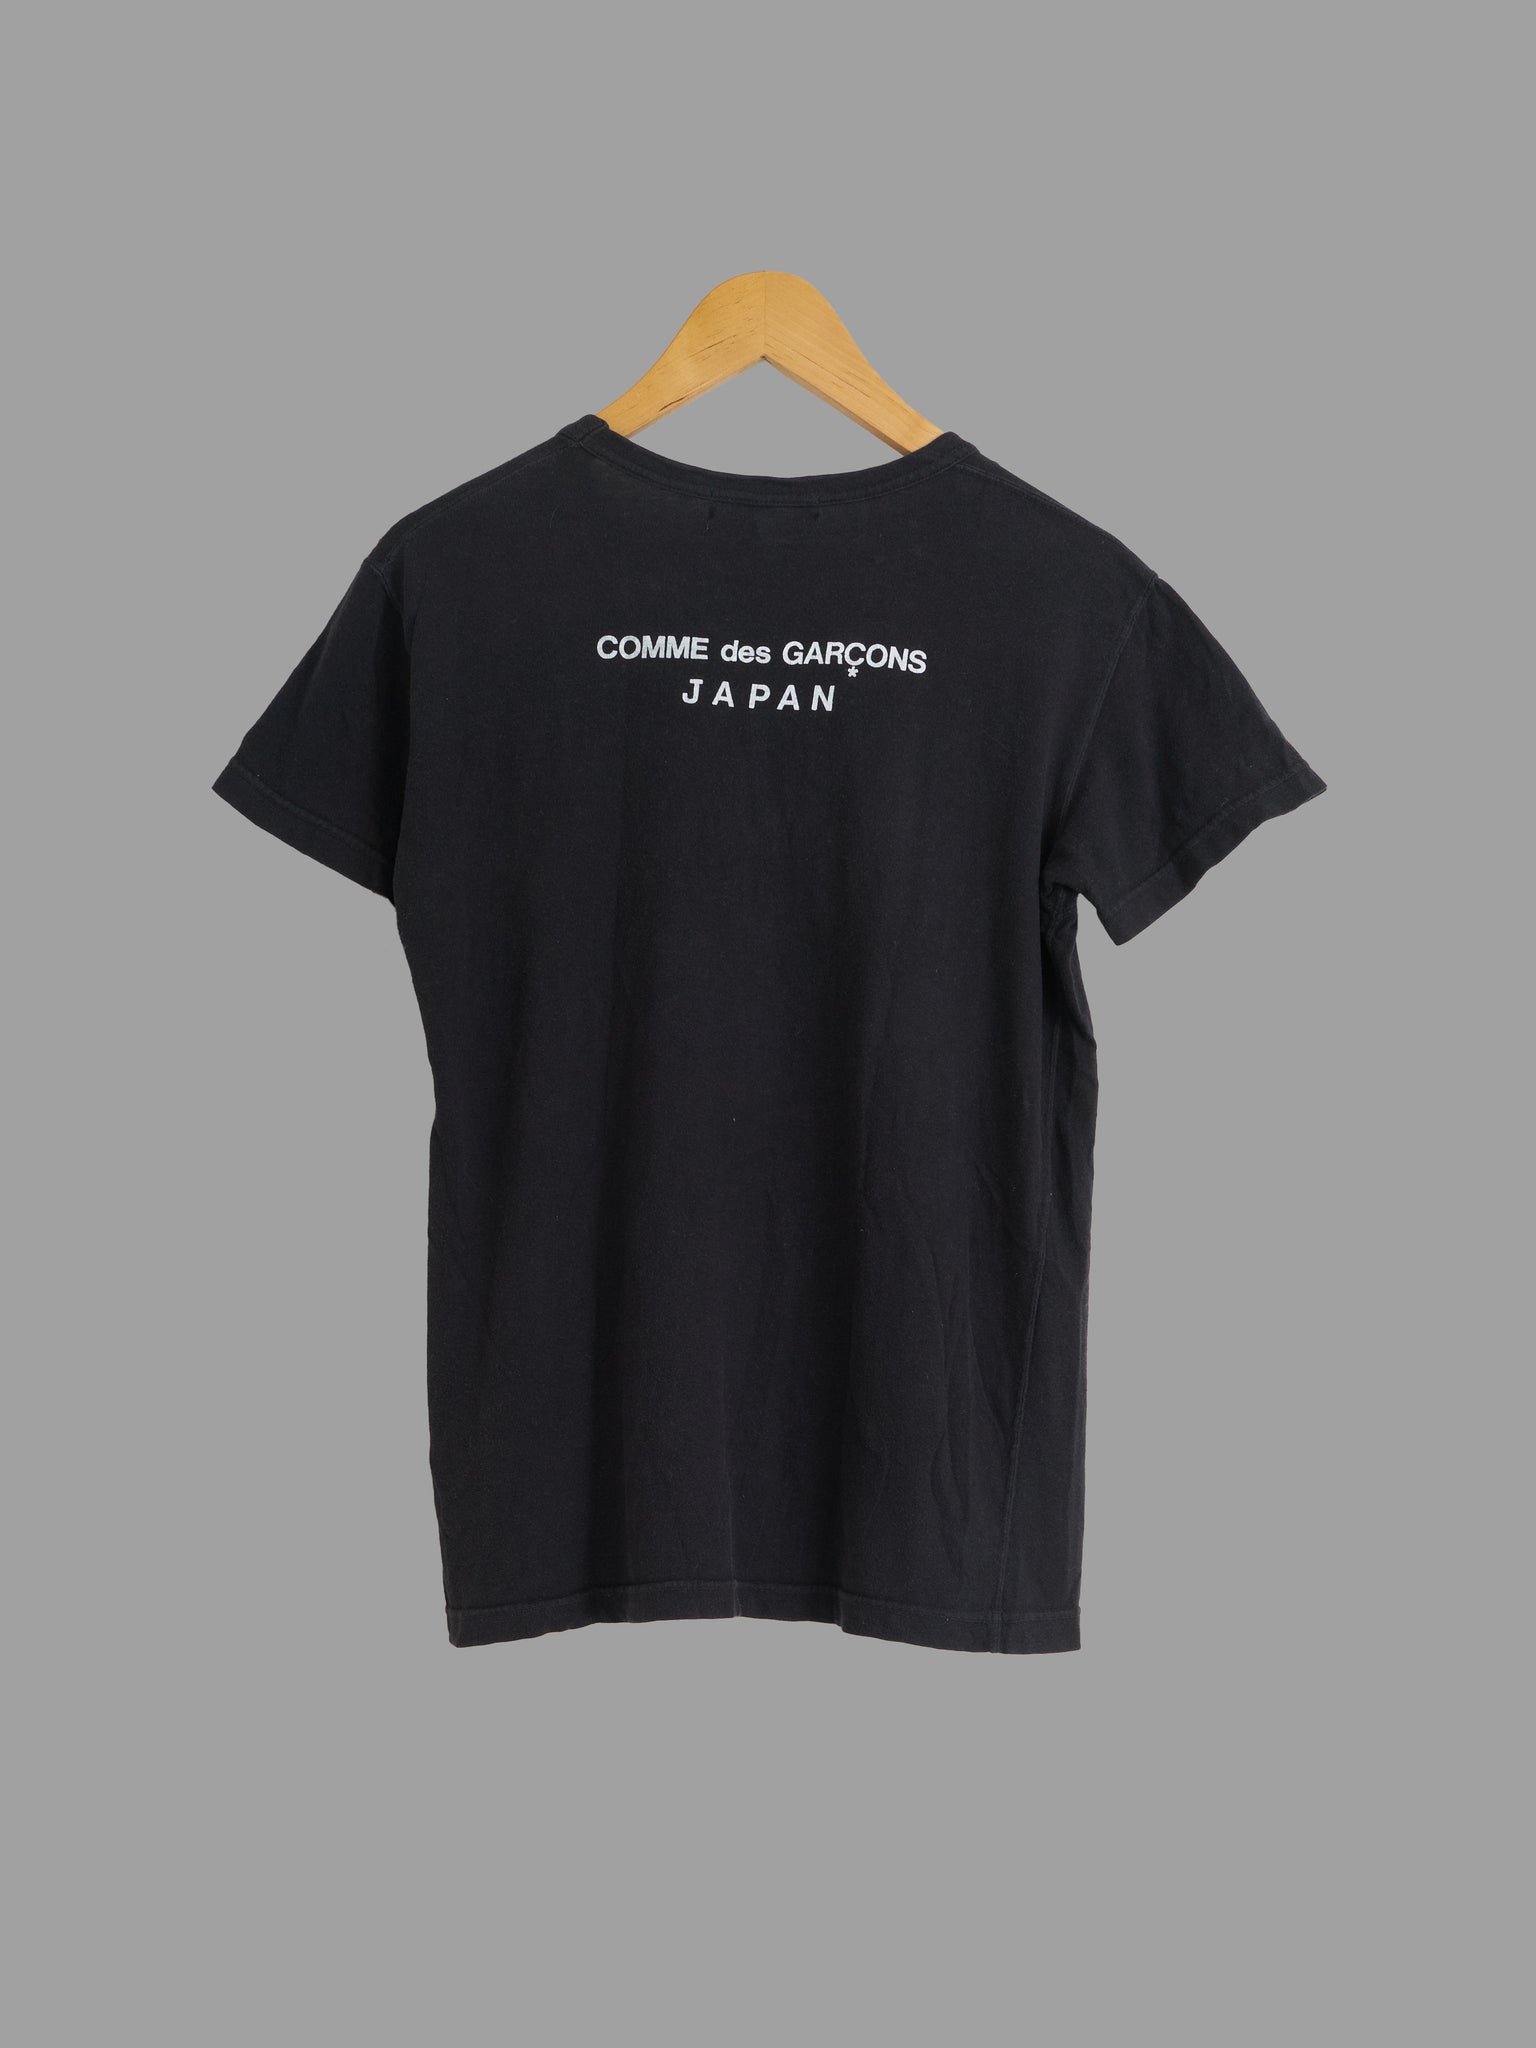 Comme des Garcons 1980s faded black cotton jersey 'CDG JAPAN' back print tshirt